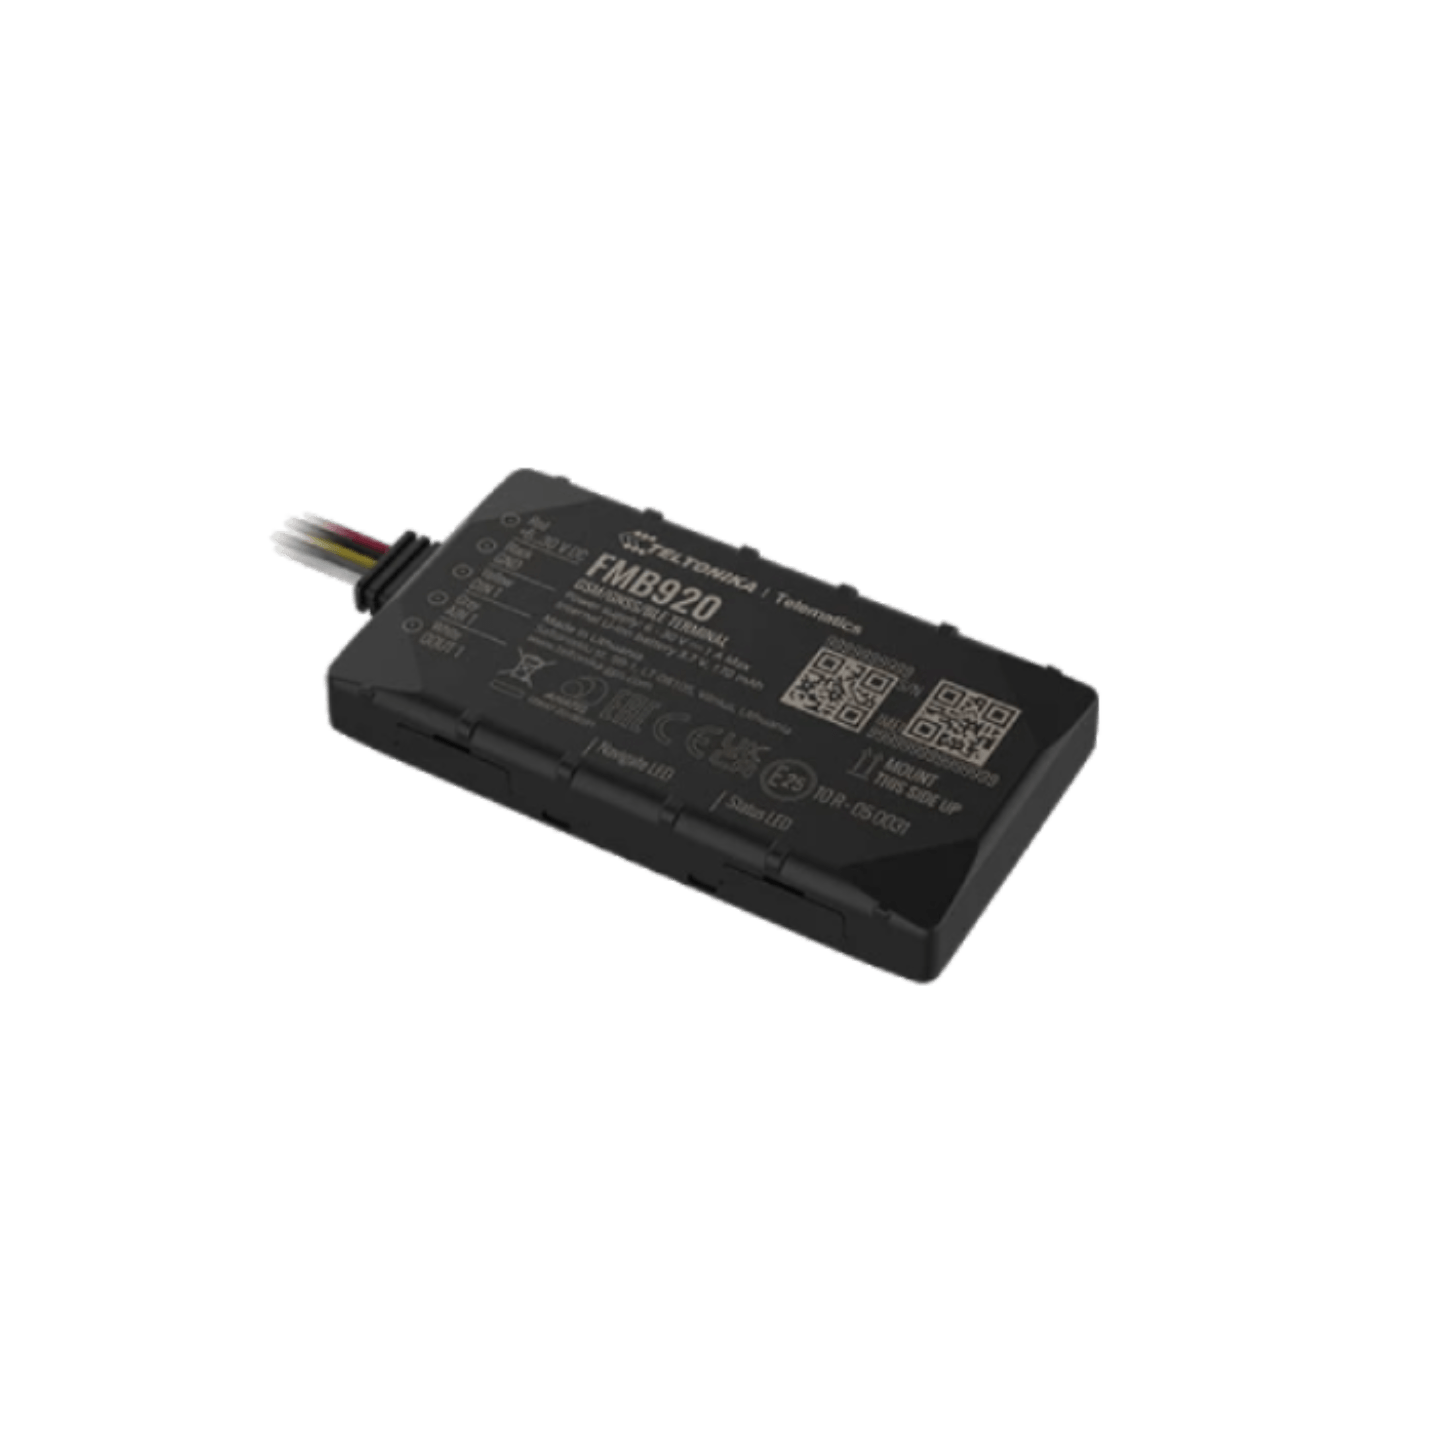 FMB-920 Smart GPS Tracker - Internal Backup Battery